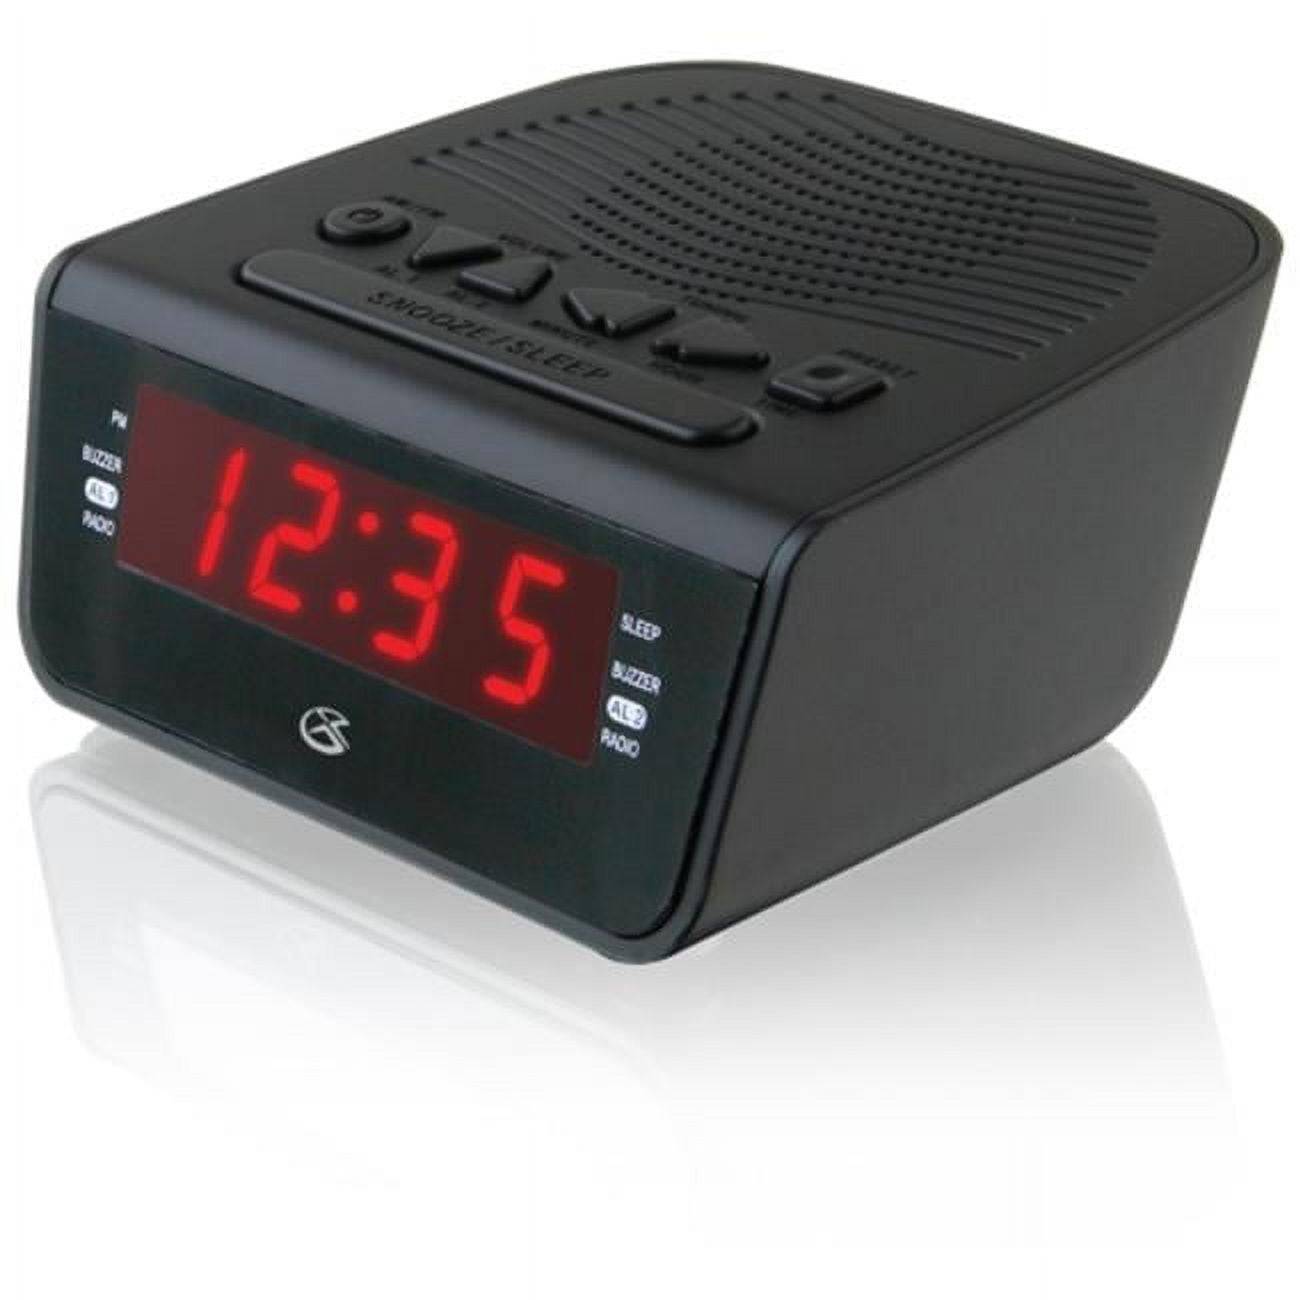 Comprar Radio reloj despertador Inves FS-088 · Hipercor